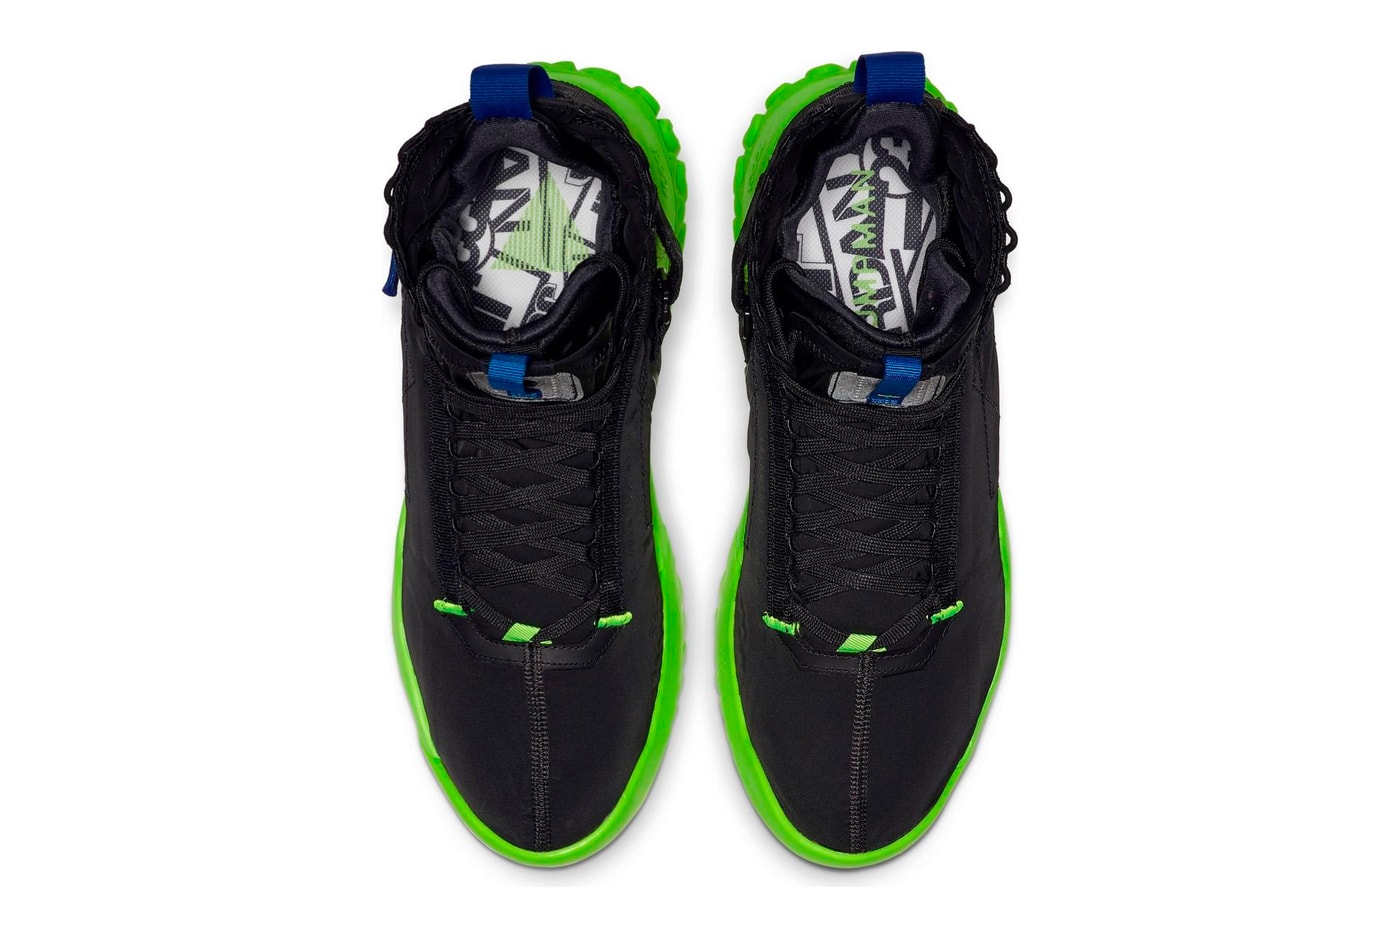 Jordan Brand Proto-React "Black/Green" Volt 